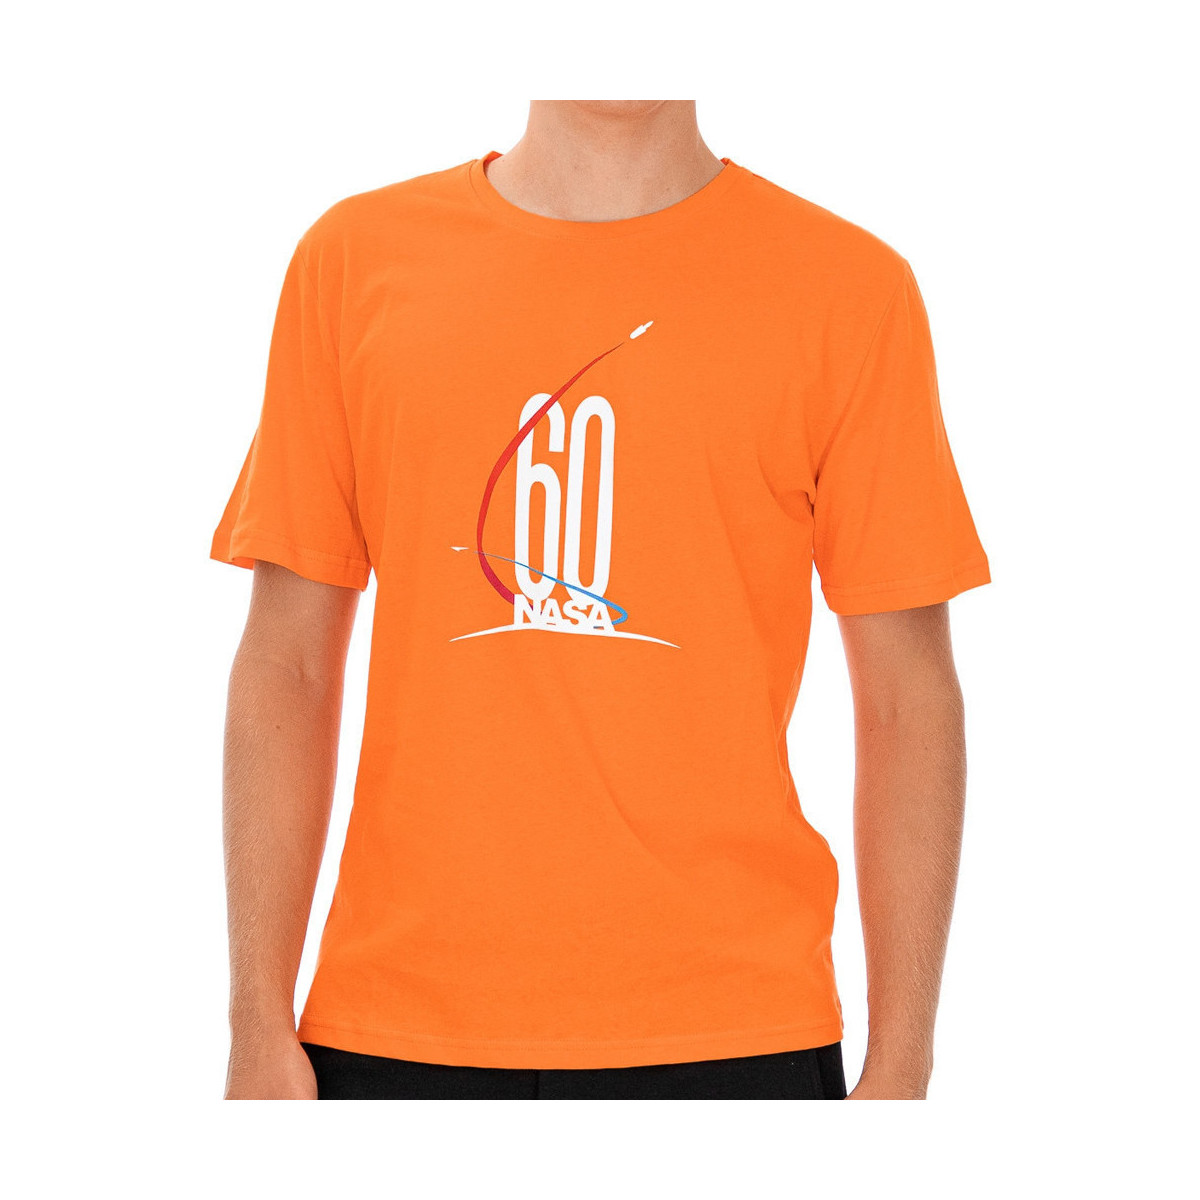 Vêtements Homme T-shirts & Polos Nasa -NASA52T Orange